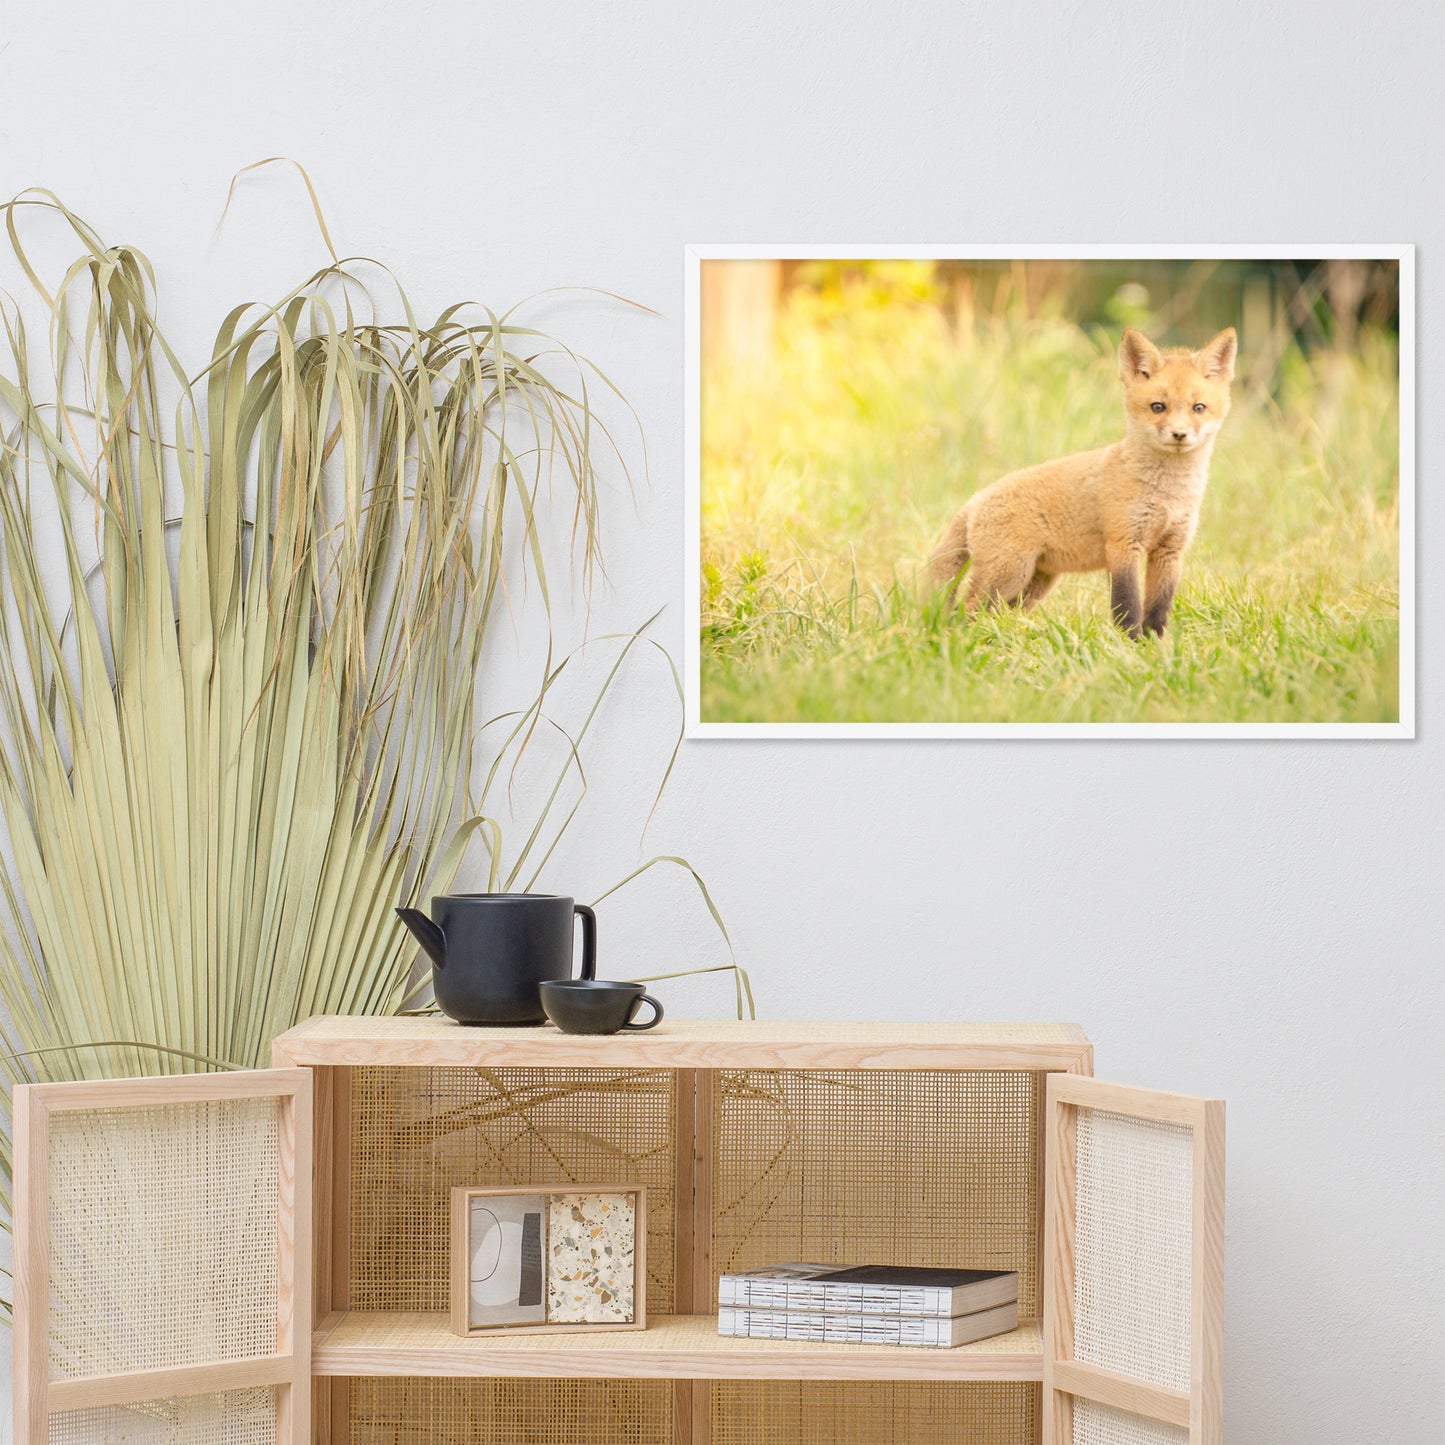 Wall Decor Over Crib: Baby Red Fox in the Sun - Animal / Wildlife / Nature Artwork - Wall Decor - Framed Wall Art Print